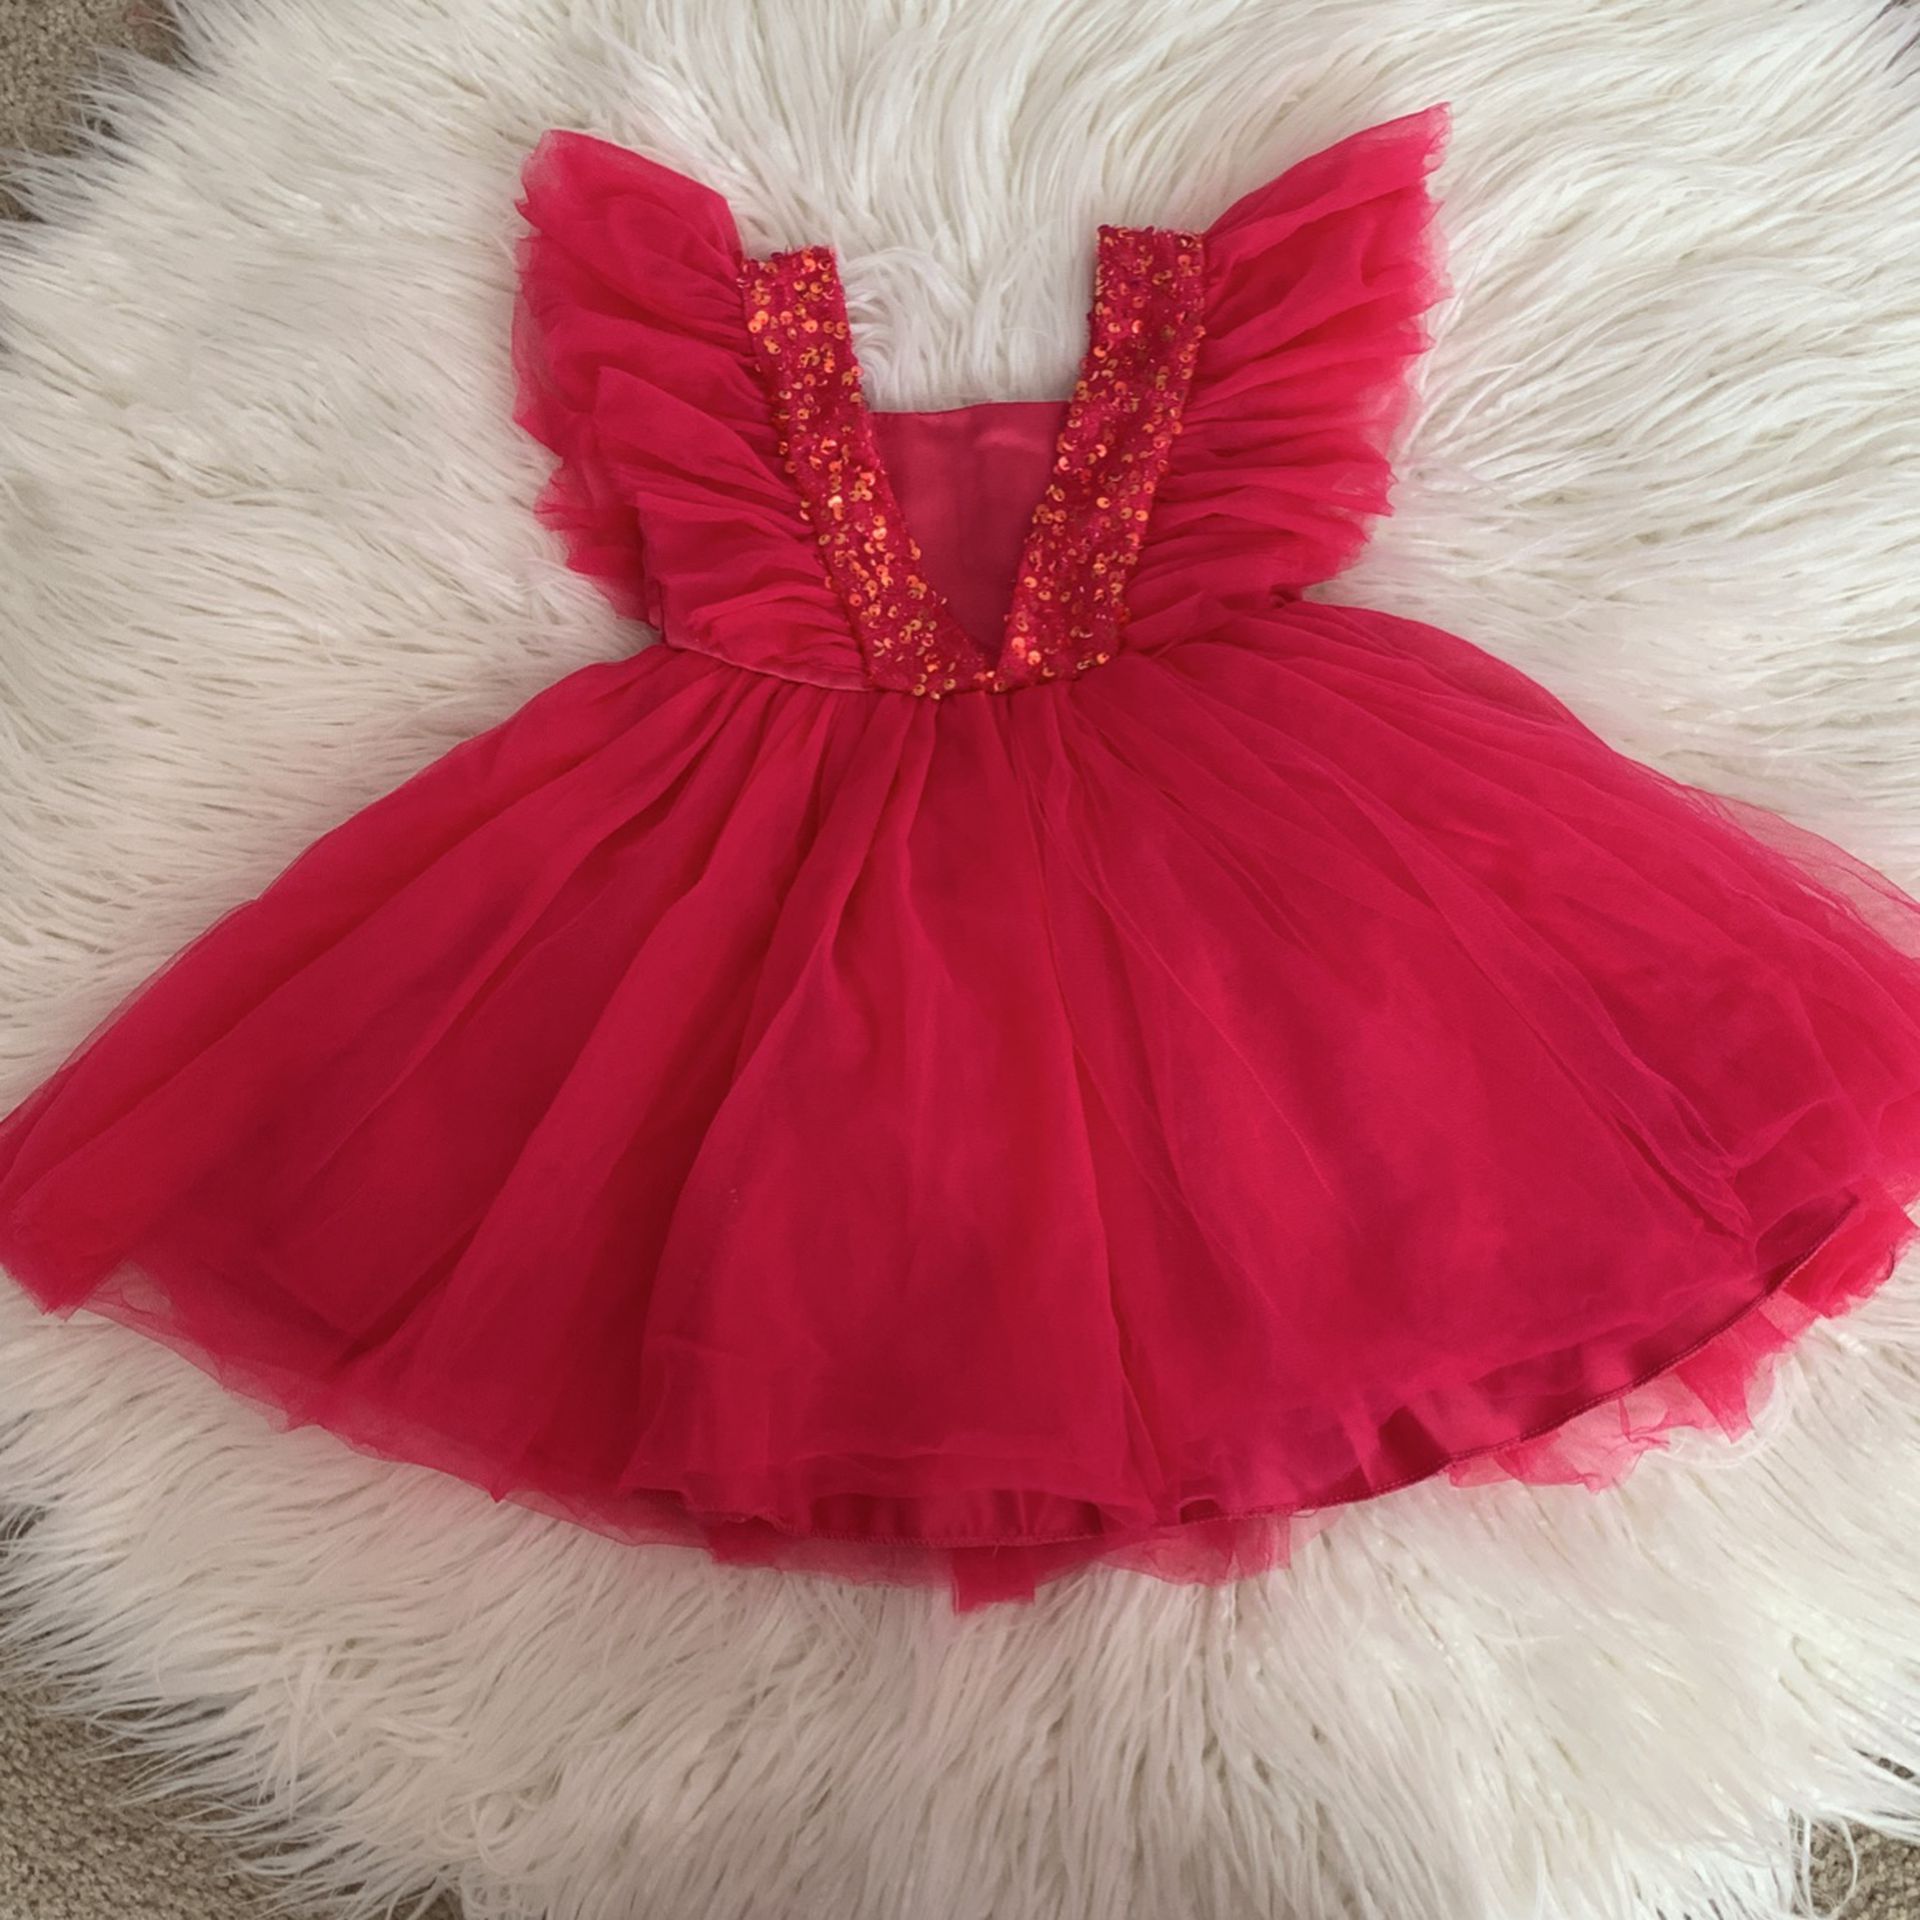 Toddler birthday dress hot pink sizeT2